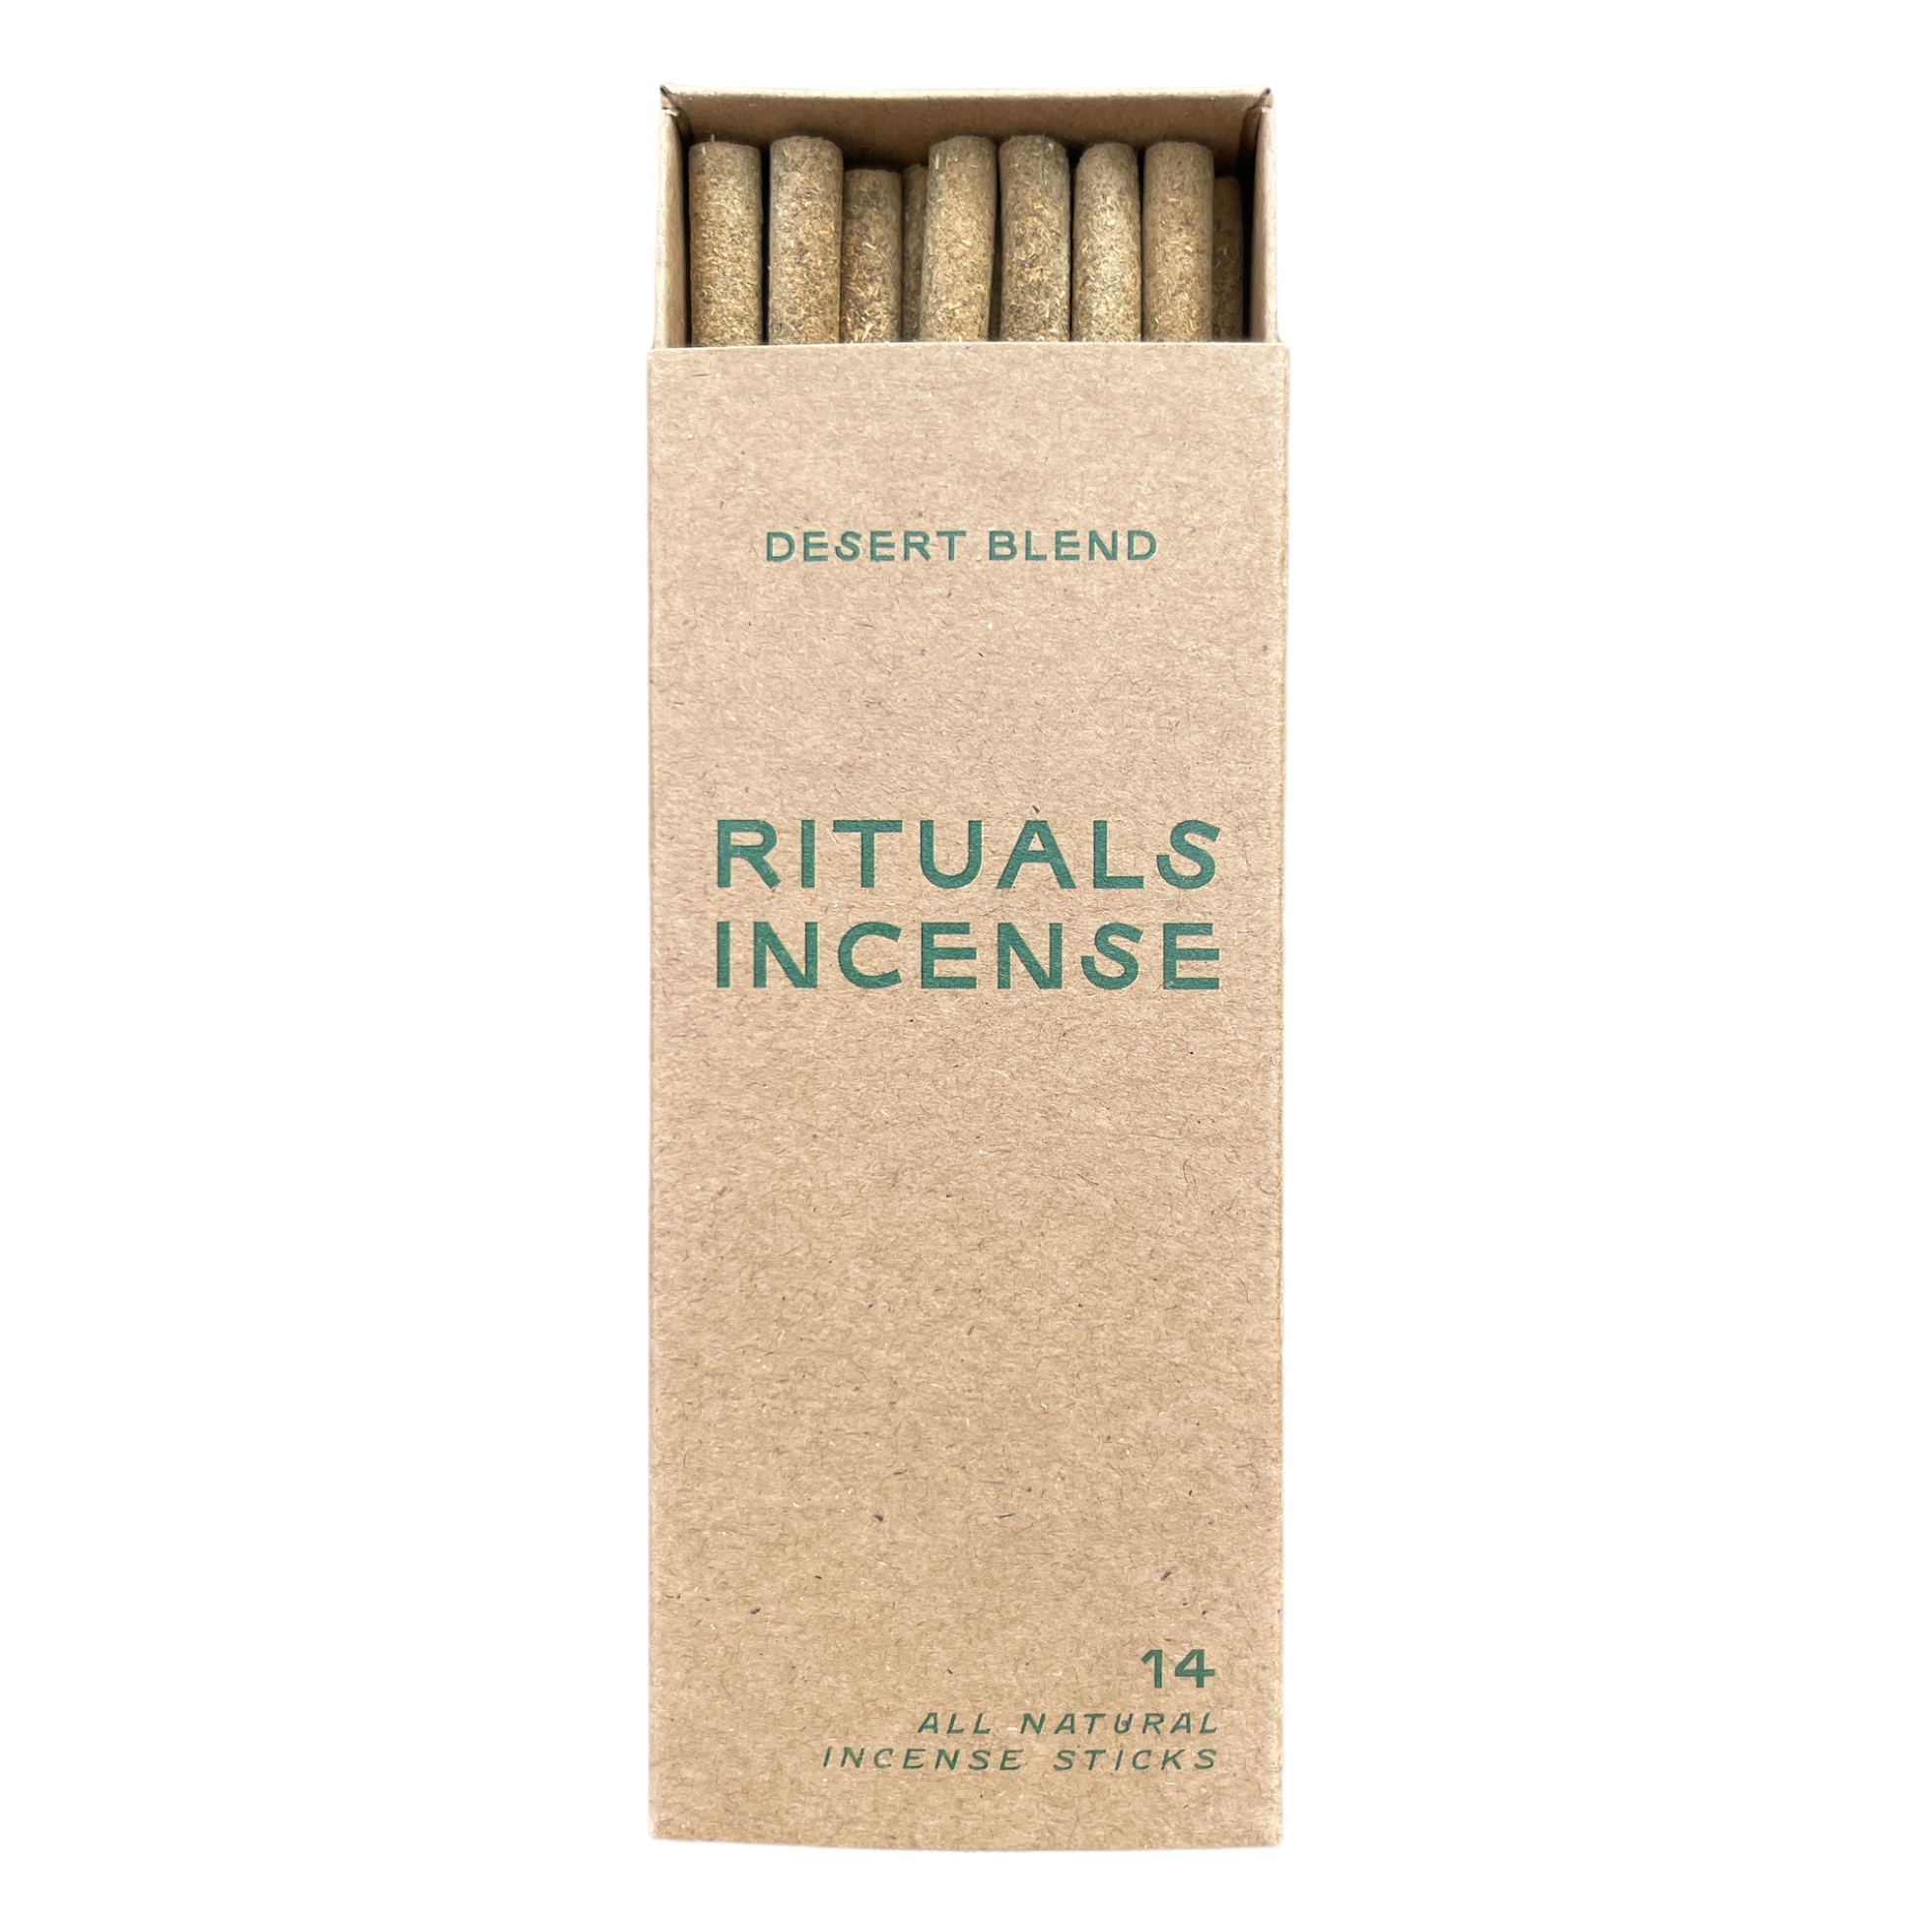 Rituals Incense 14 Pack Desert Blend Incense Sticks | Prelude & Dawn | Los Angeles, CA